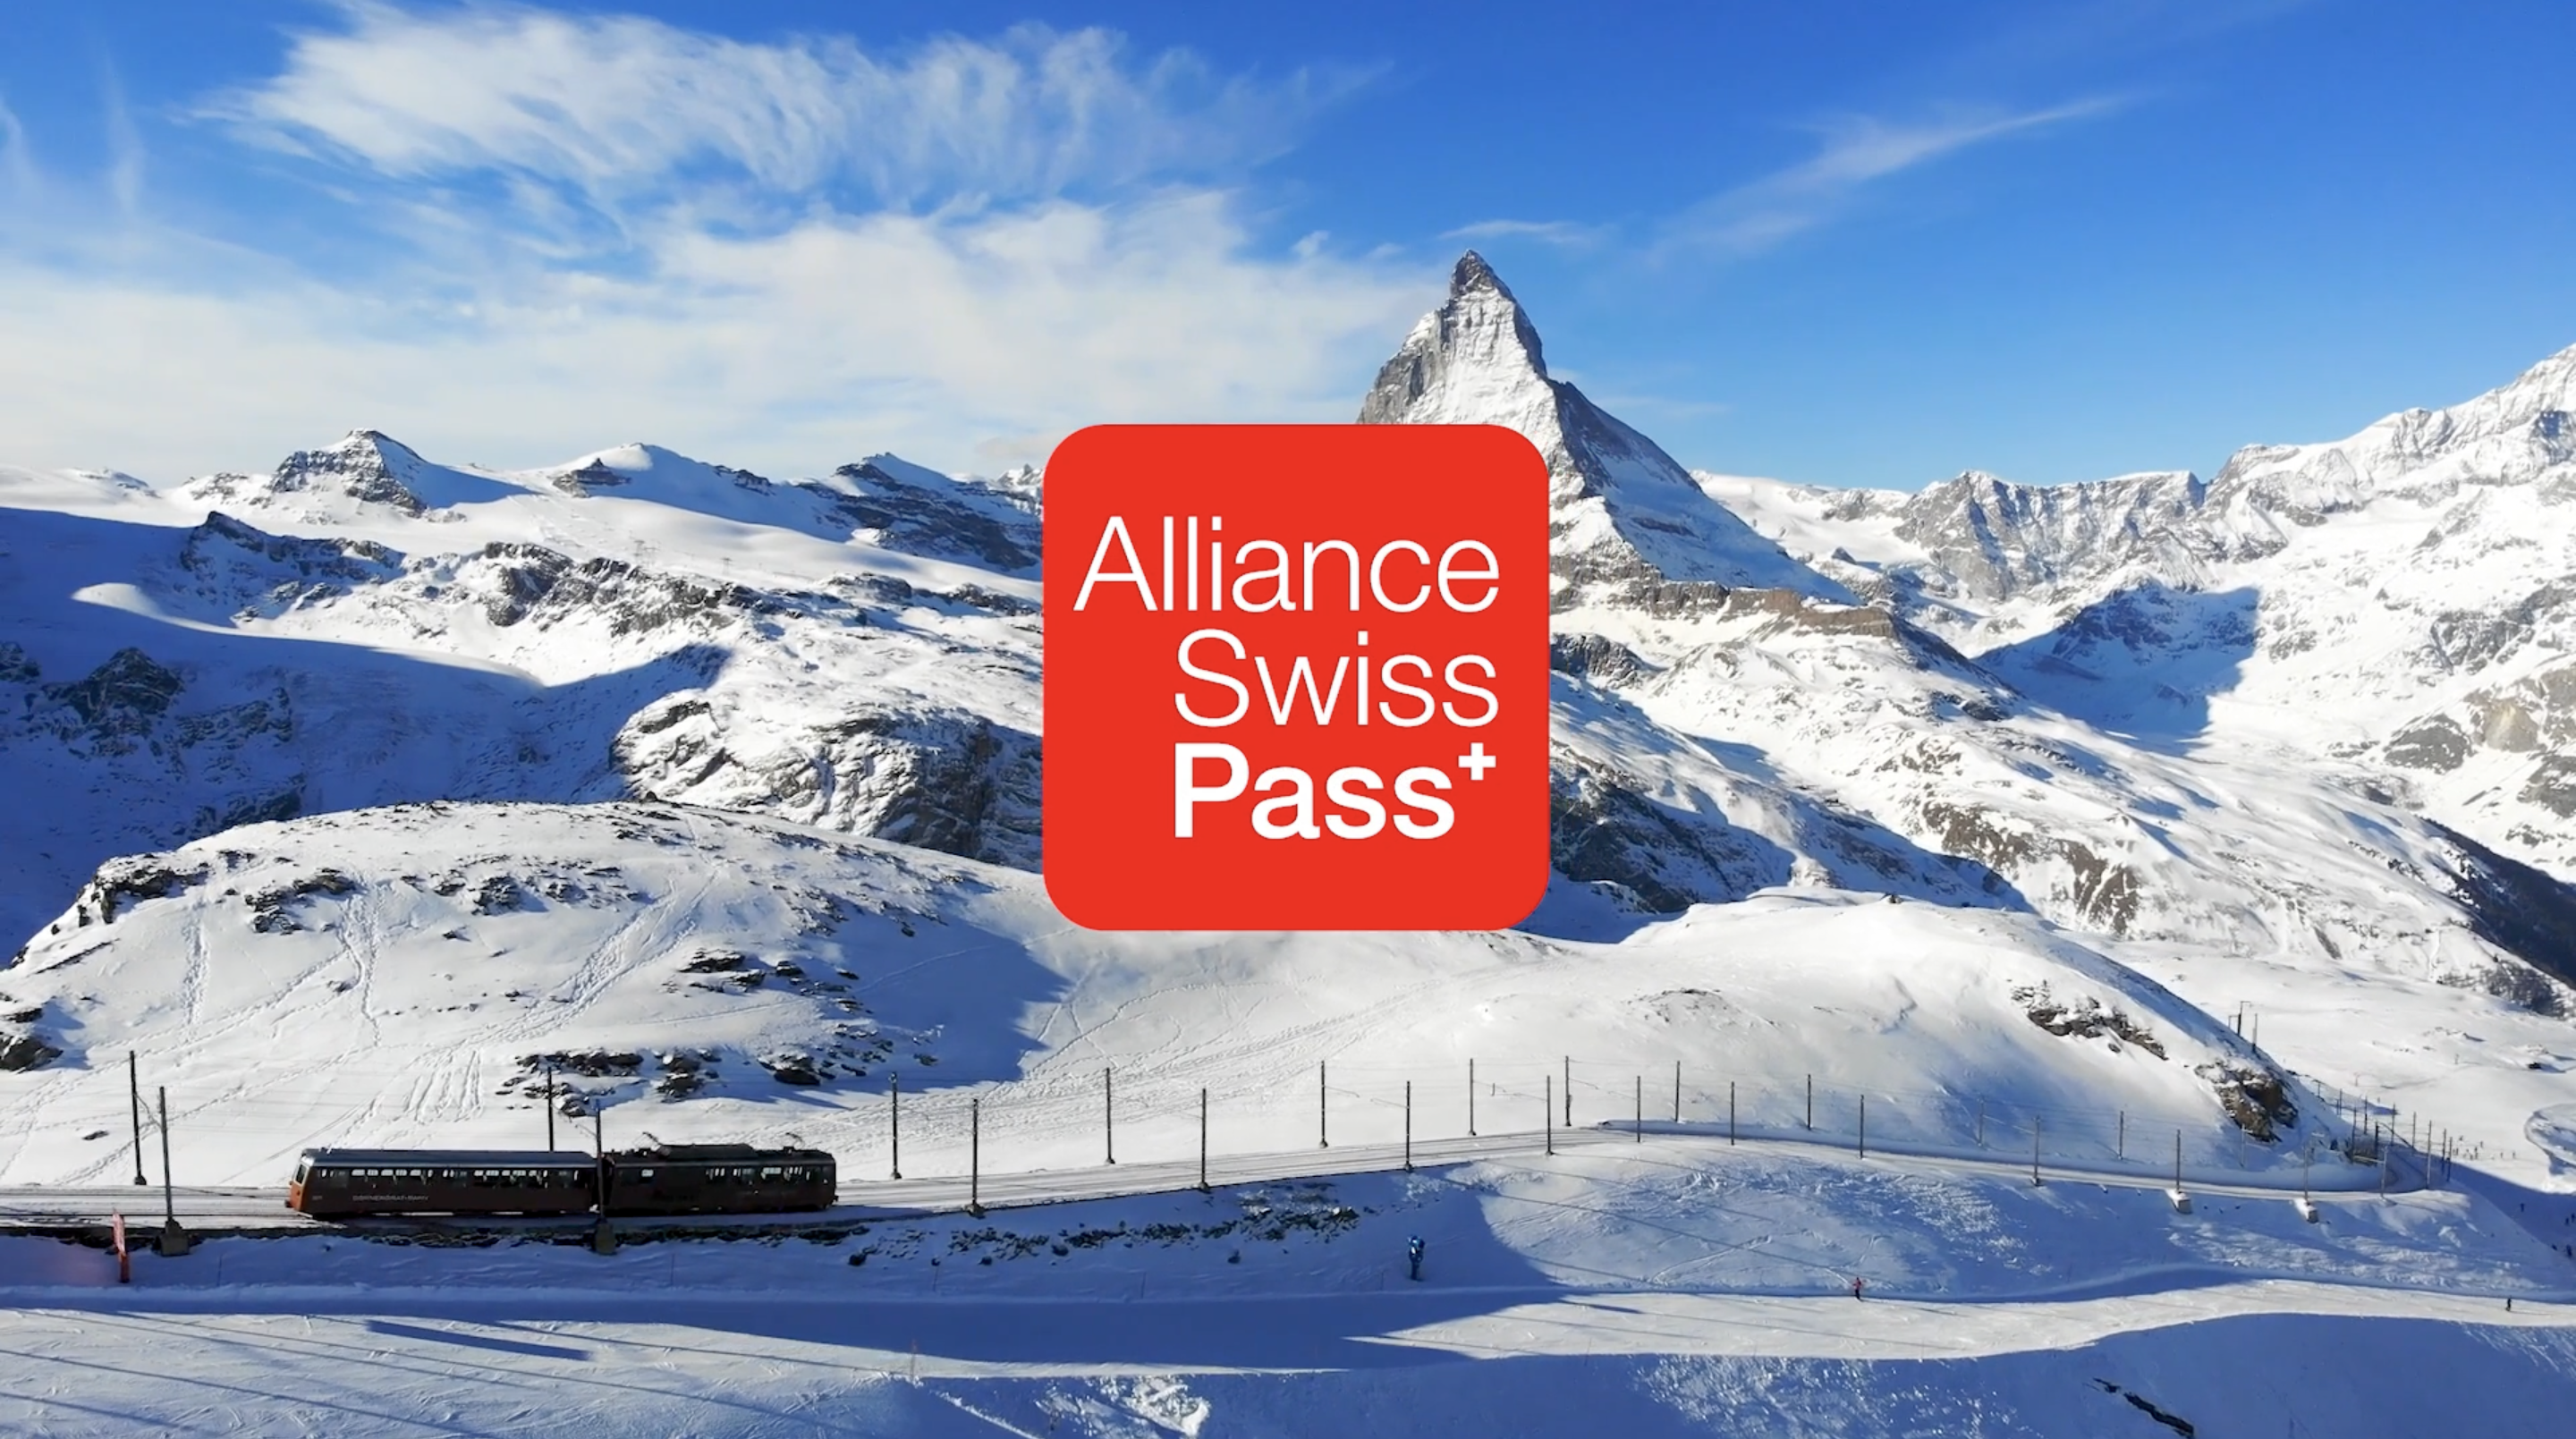 About Alliance SwissPass 